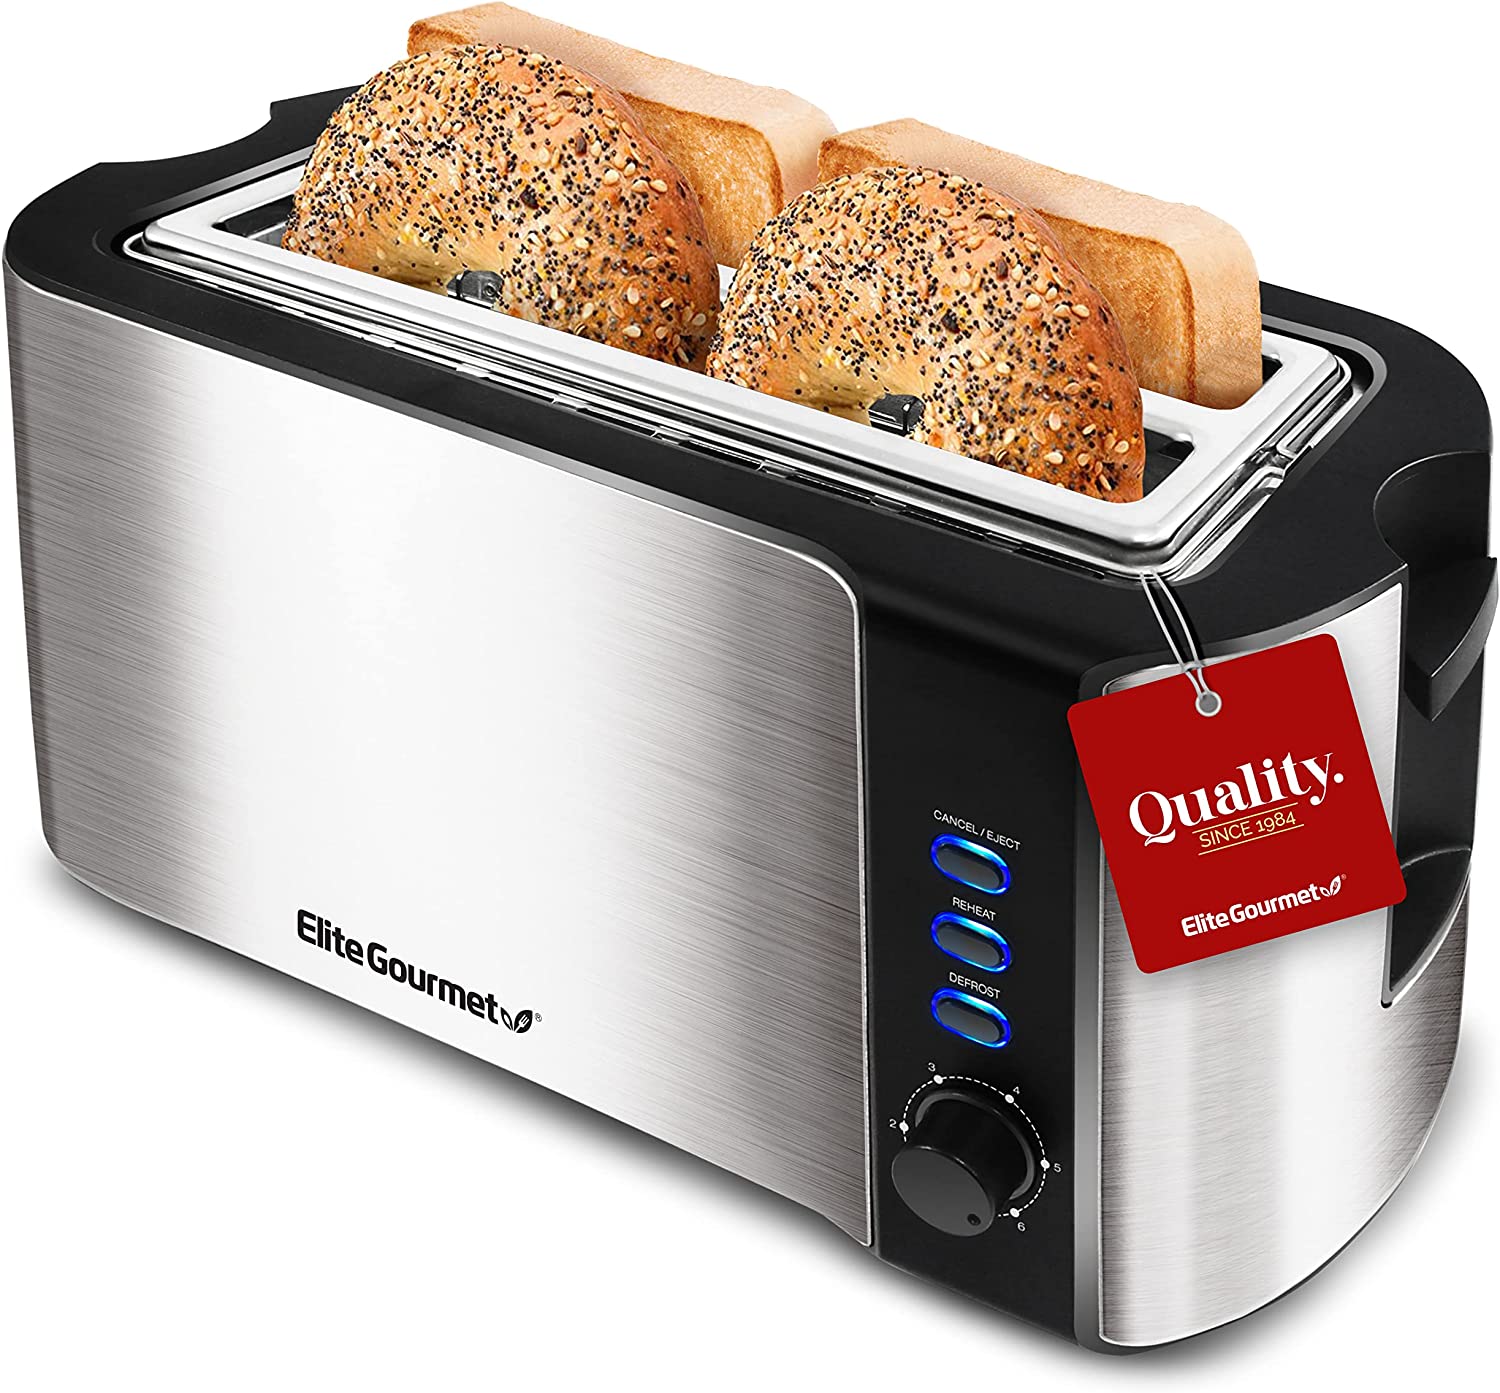 https://www.dontwasteyourmoney.com/wp-content/uploads/2020/10/elite-gourmet-long-4-slice-toaster.jpg